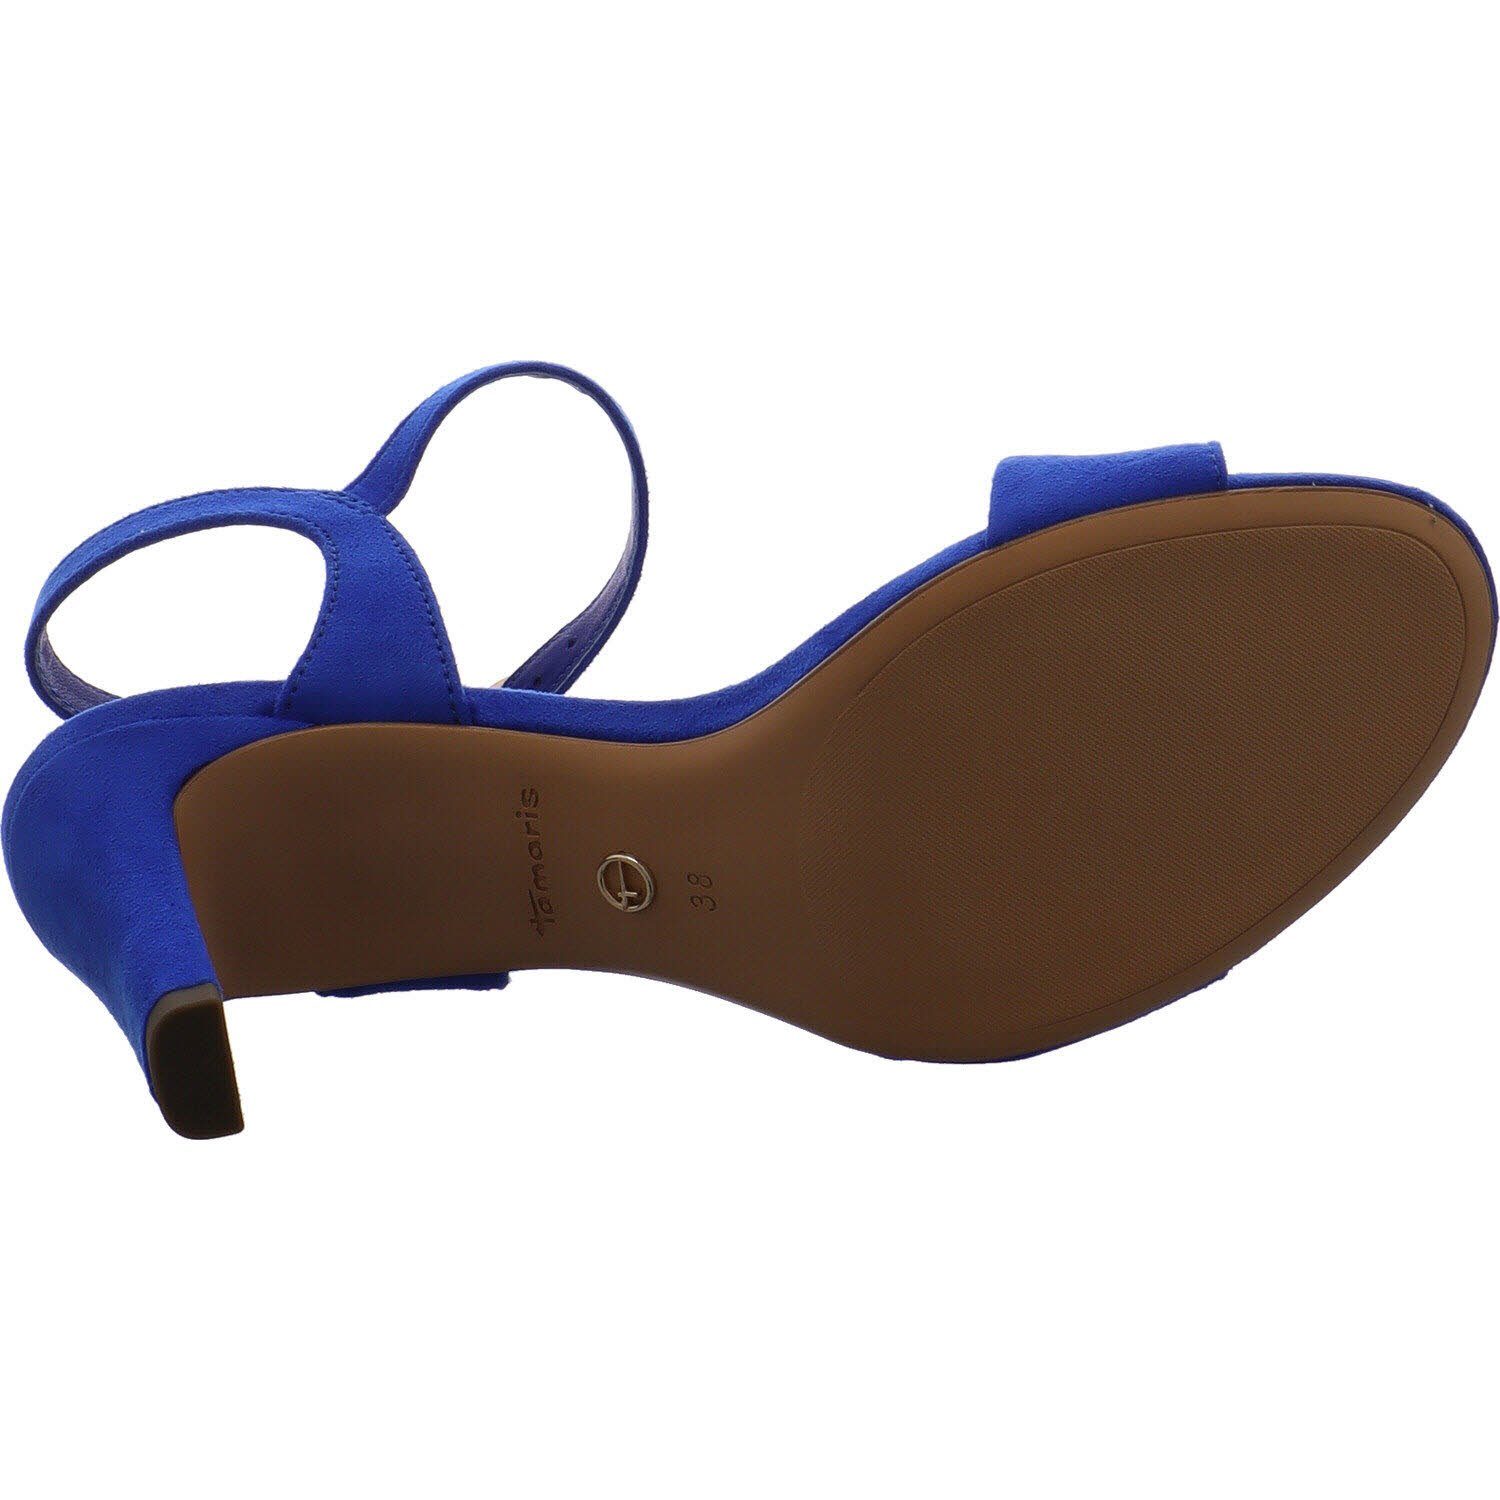 ROYAL Sandalette BLUE Tamaris 187